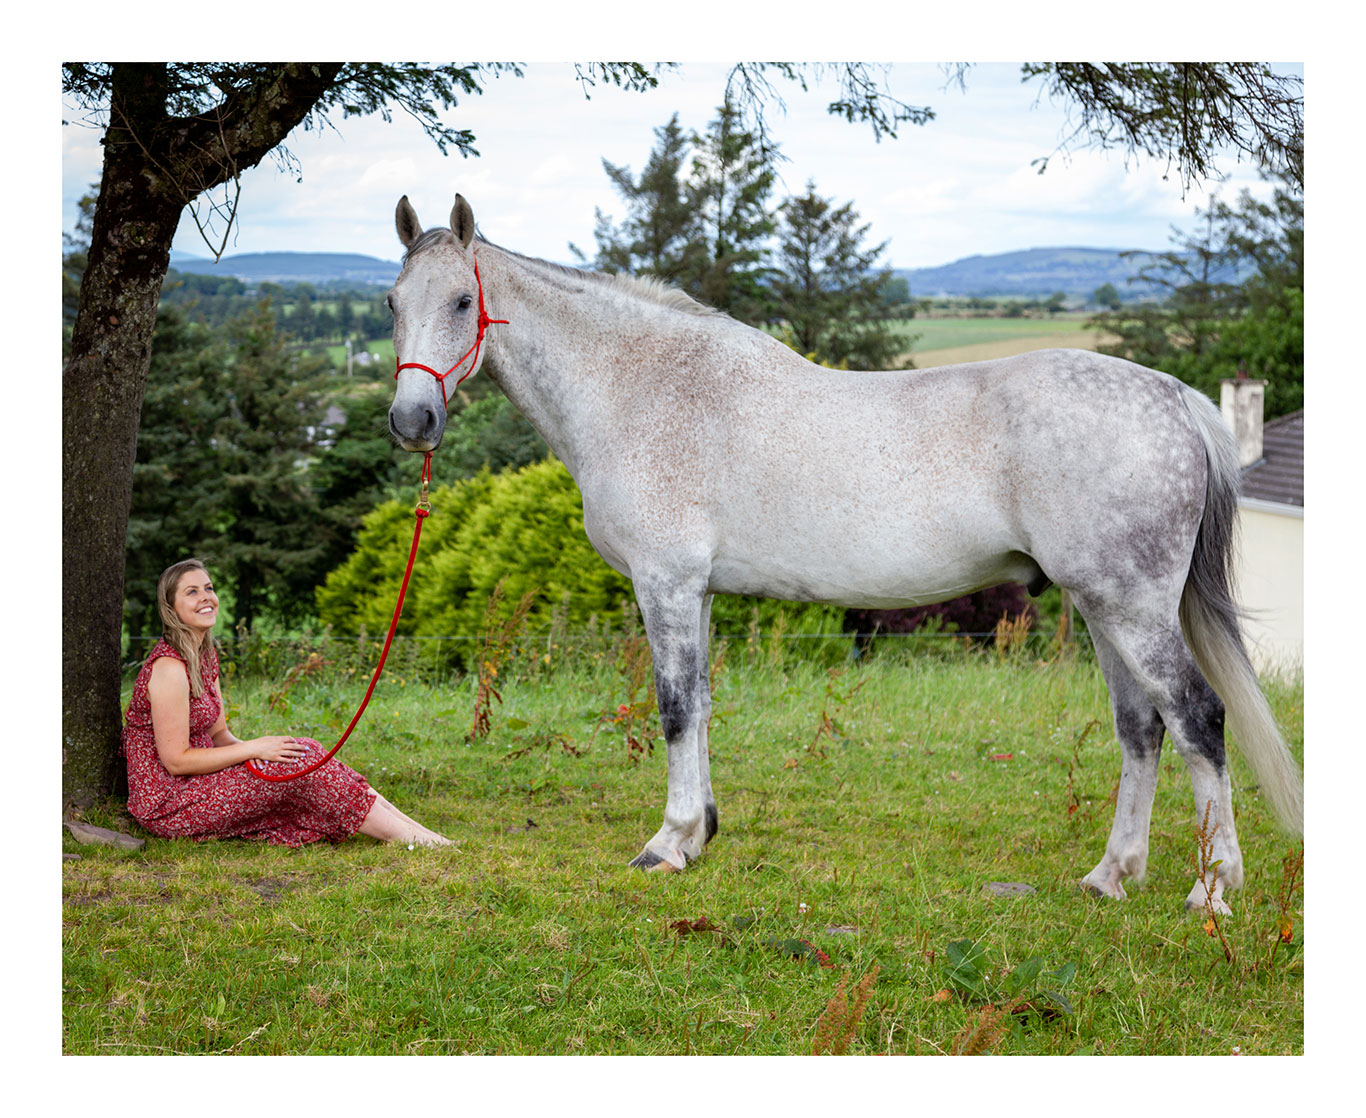 Kevin O'Donnell, Portrait, Horsemanship, Photography, 